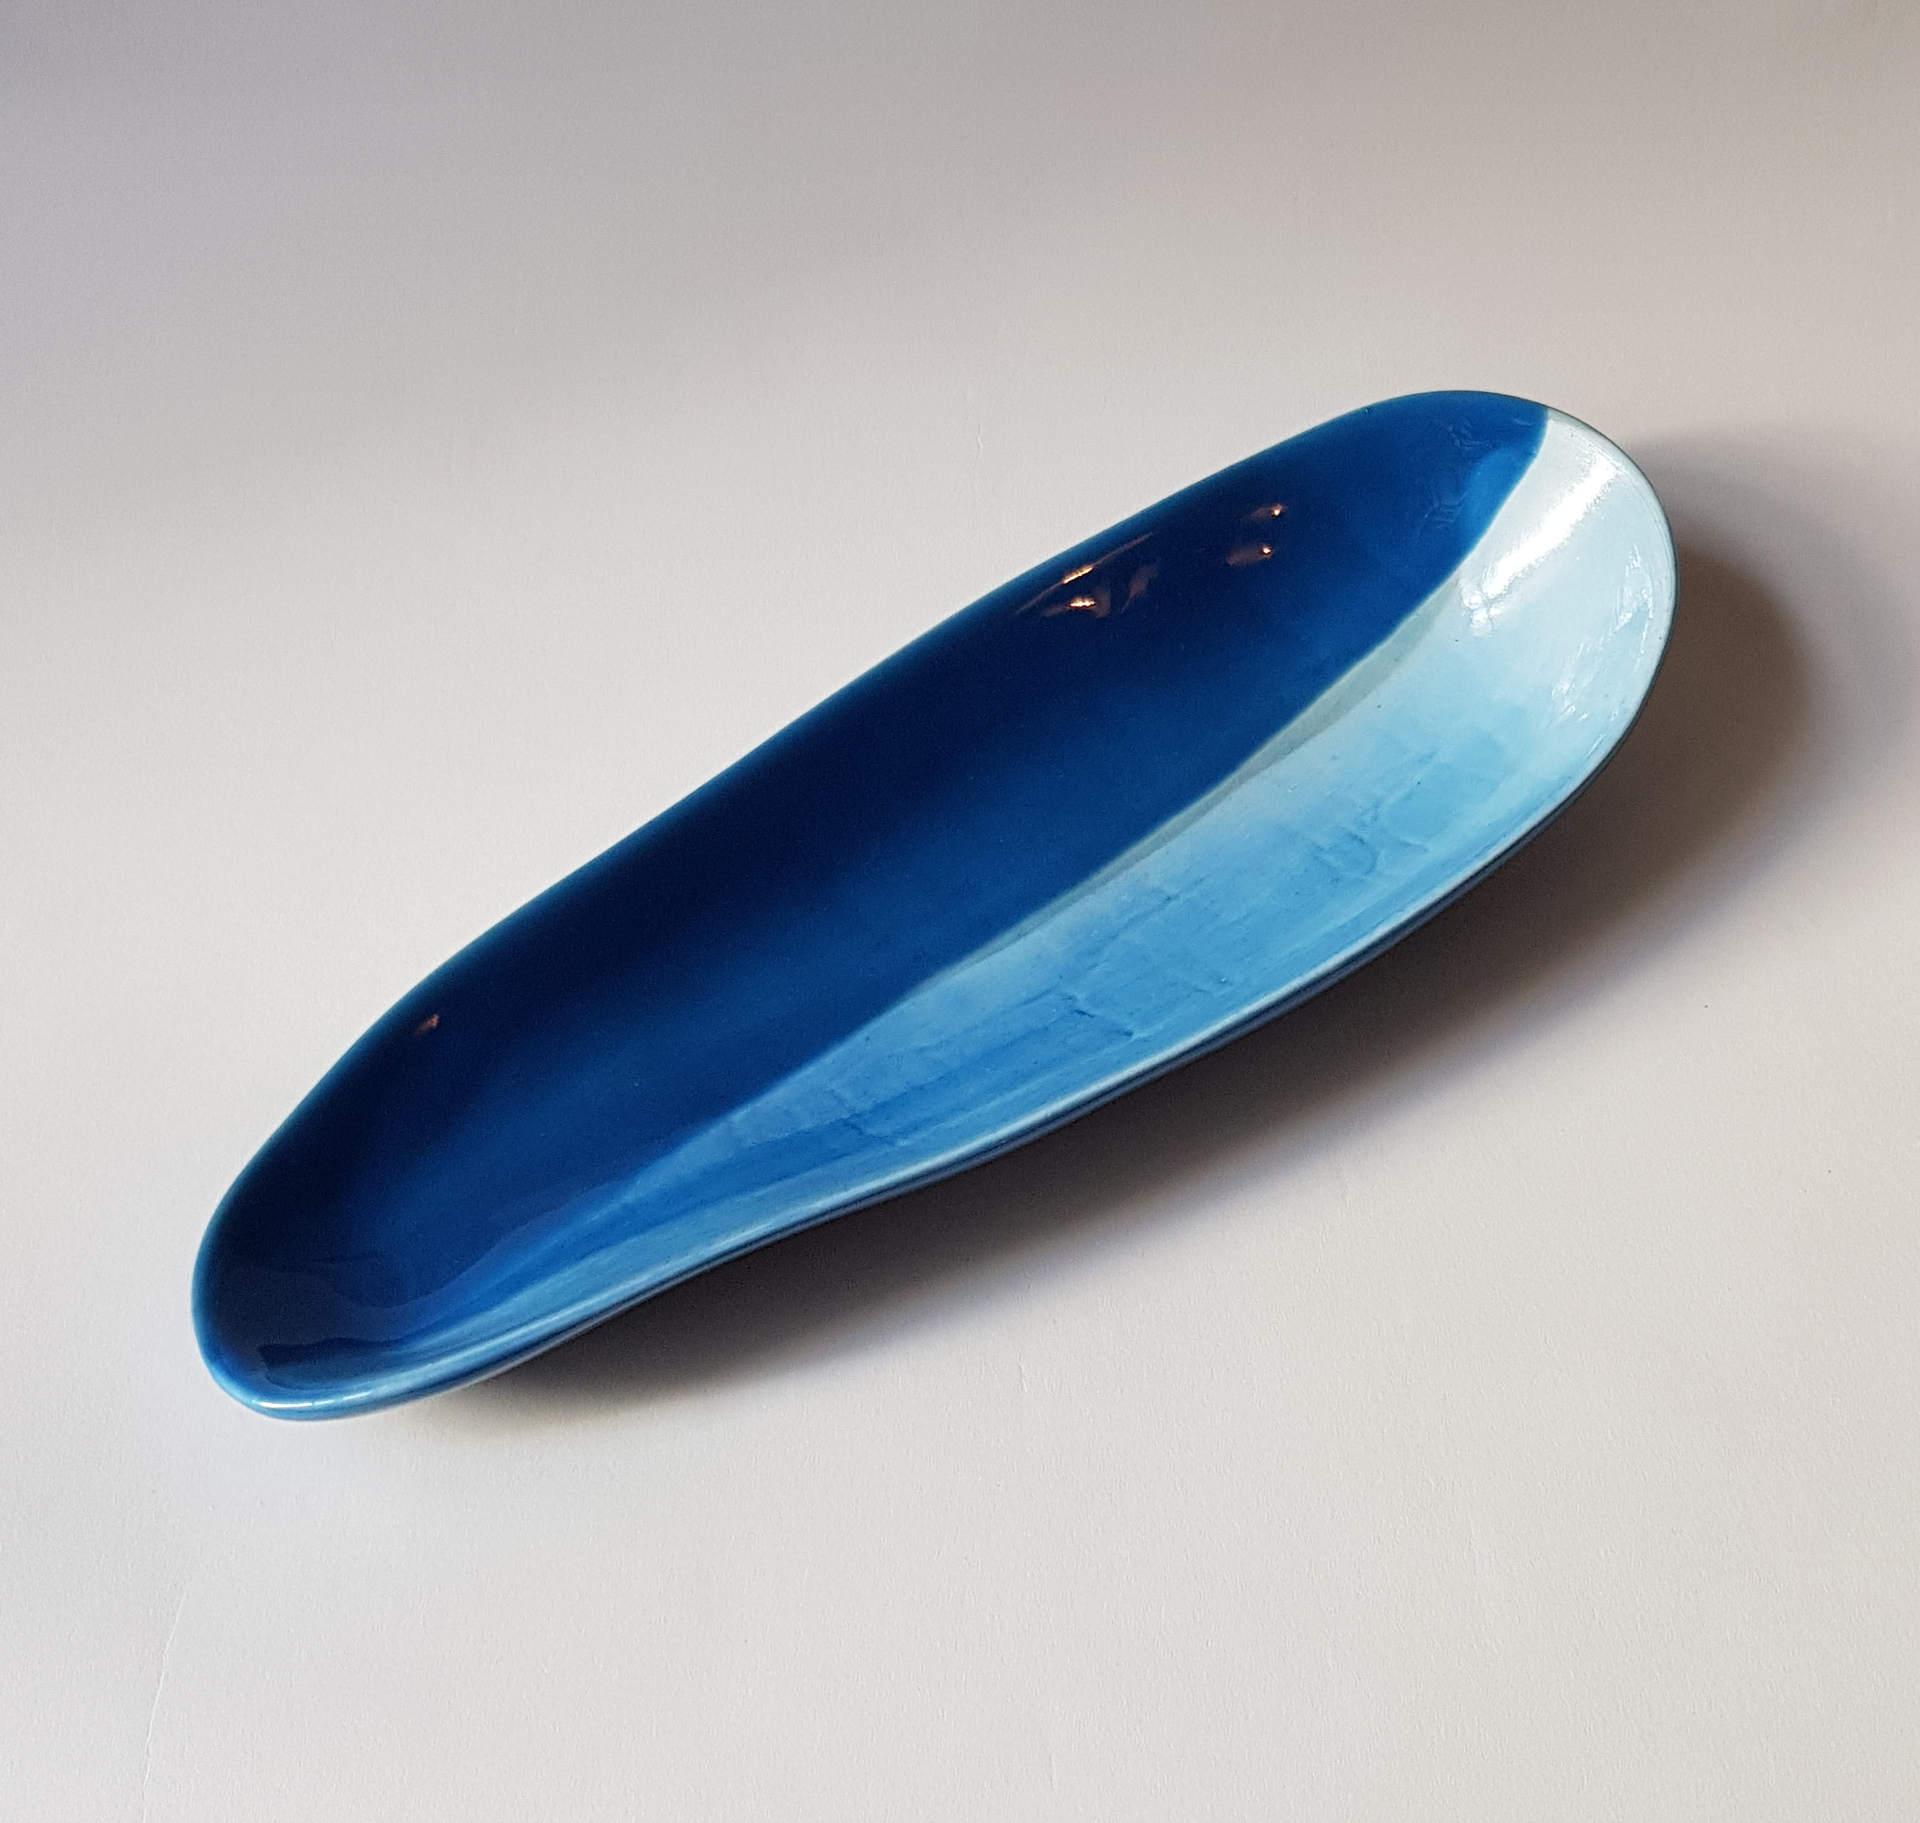 Ceramic vessel "Barque Bleue" by Claire de Lavallee